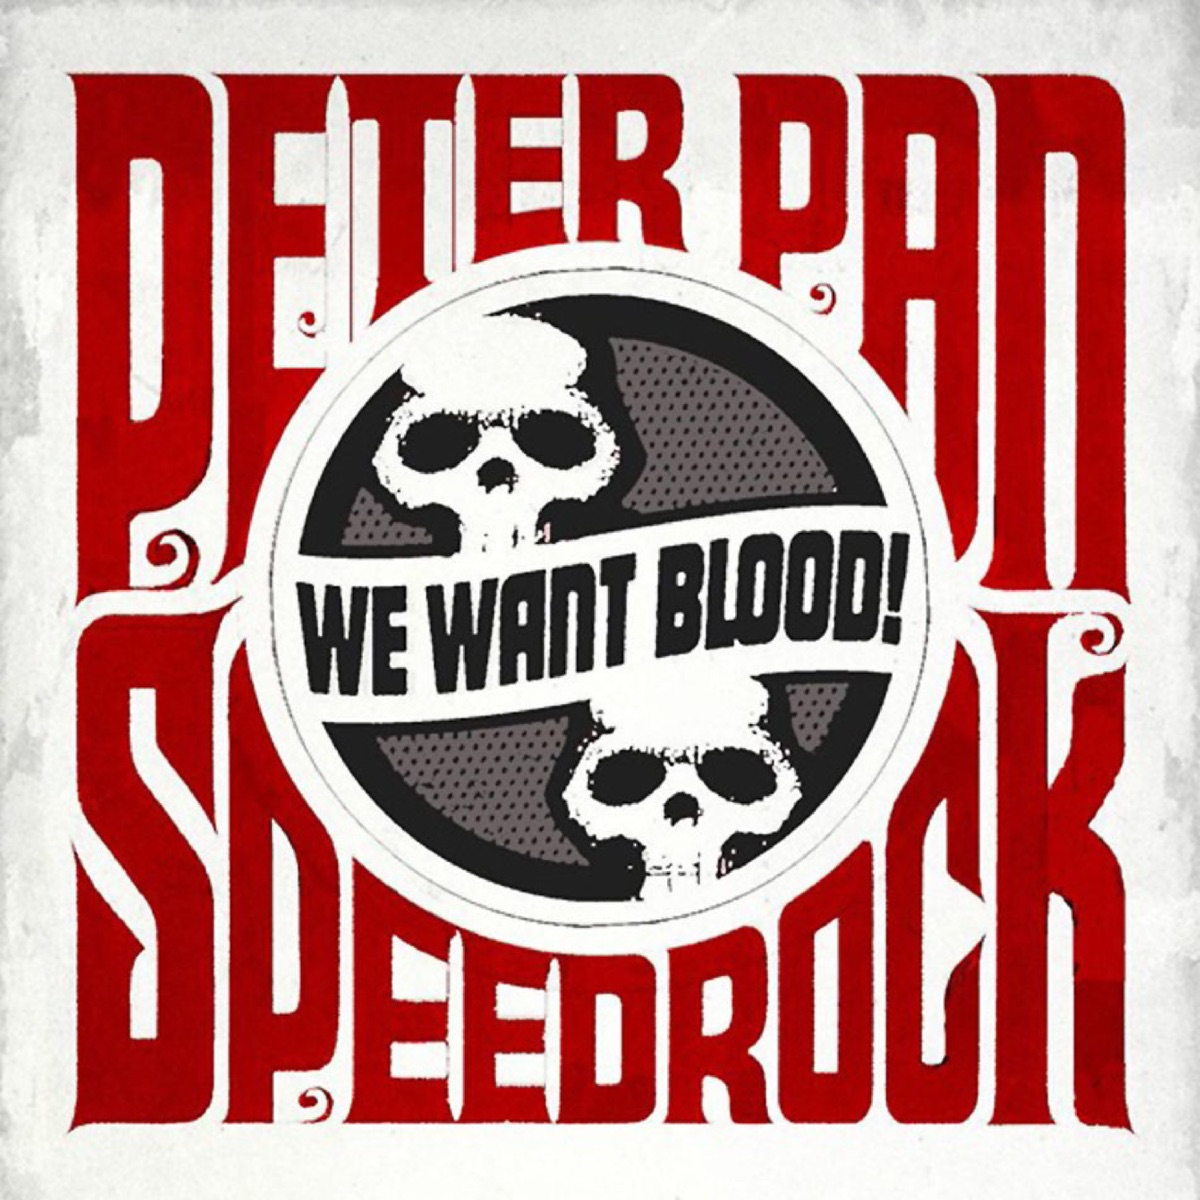 Killer Machine – Album par Peter Pan Speedrock – Apple Music